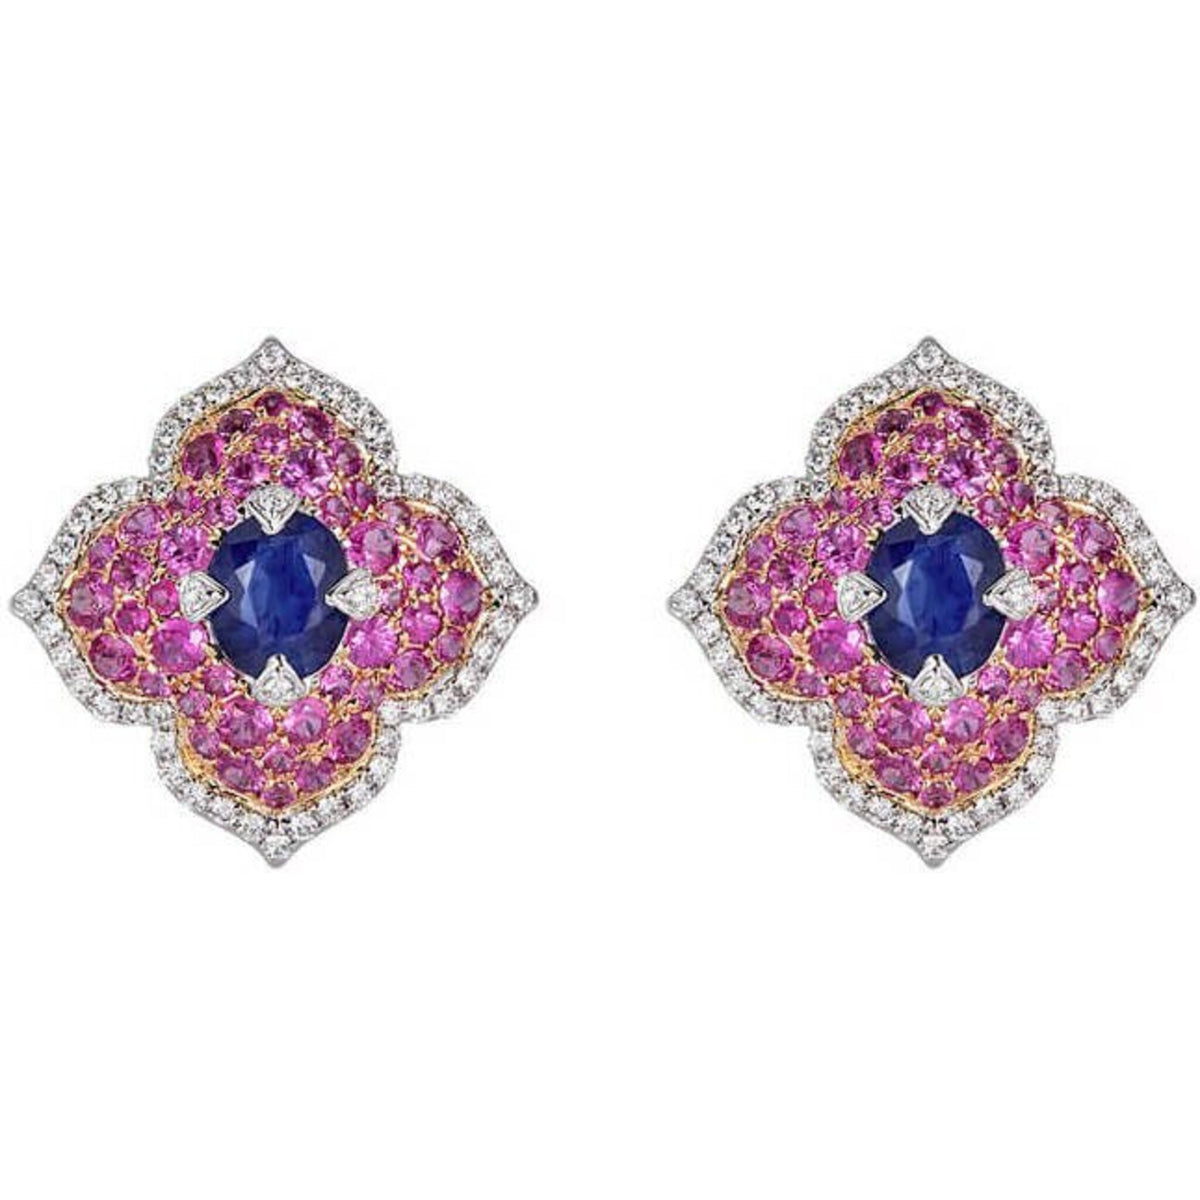 Piranesi Pacha Earrings with Blue & Pink Sapphires